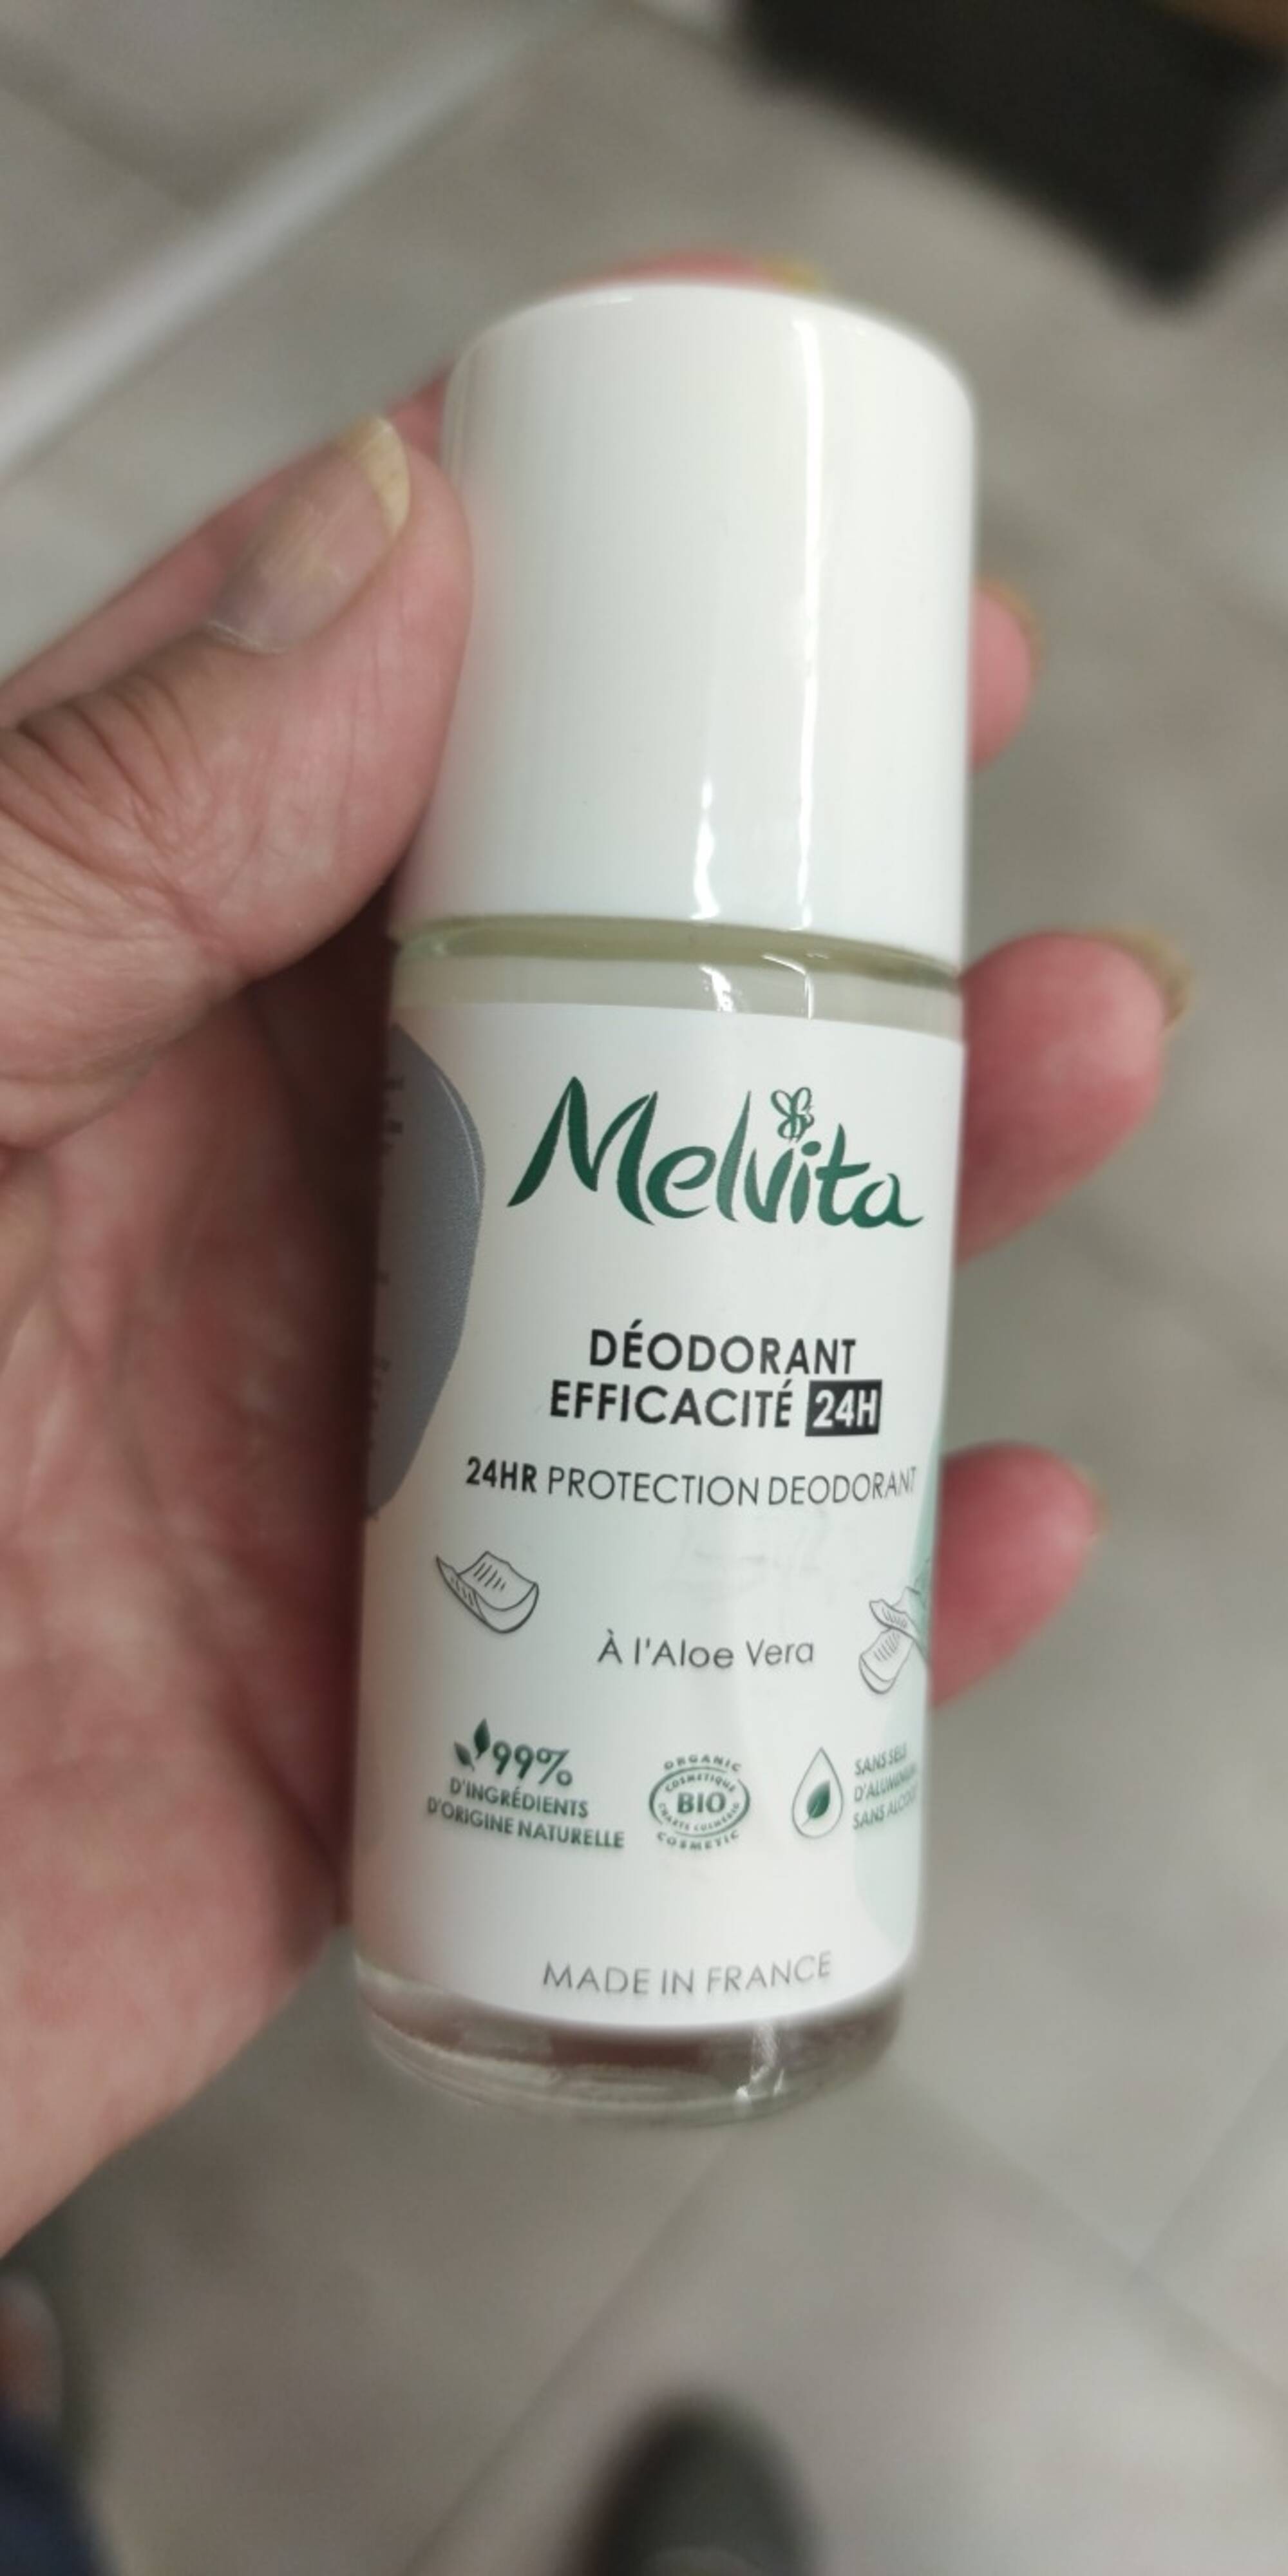 MELVITA - Déodorant efficacité- protection déodorant